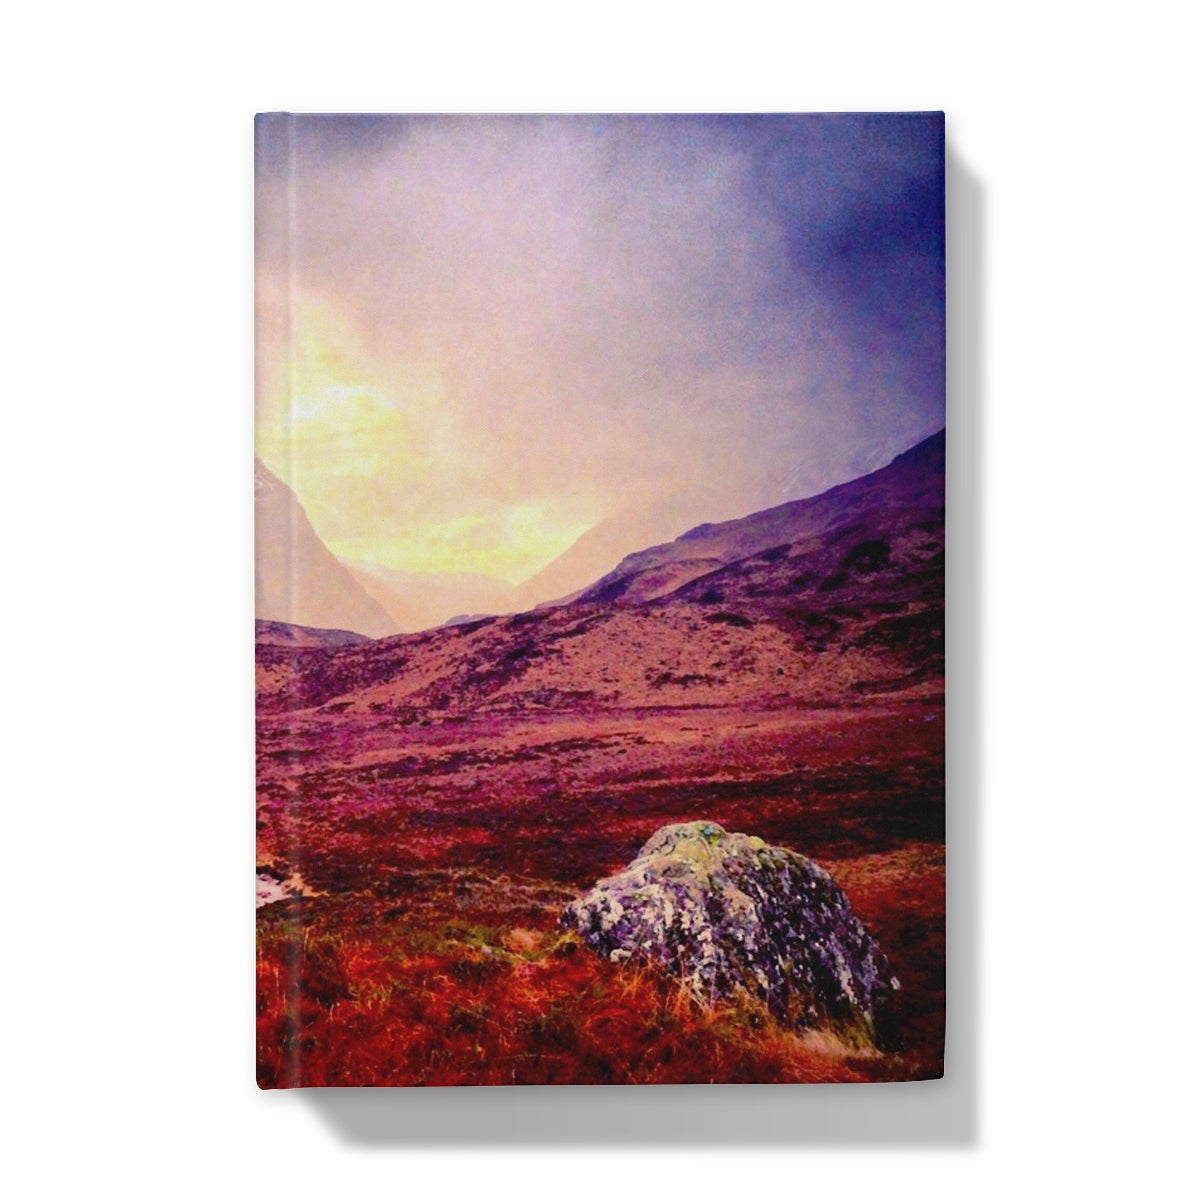 A Brooding Glencoe Art Gifts Hardback Journal-Journals & Notebooks-Glencoe Art Gallery-A5-Plain-Paintings, Prints, Homeware, Art Gifts From Scotland By Scottish Artist Kevin Hunter